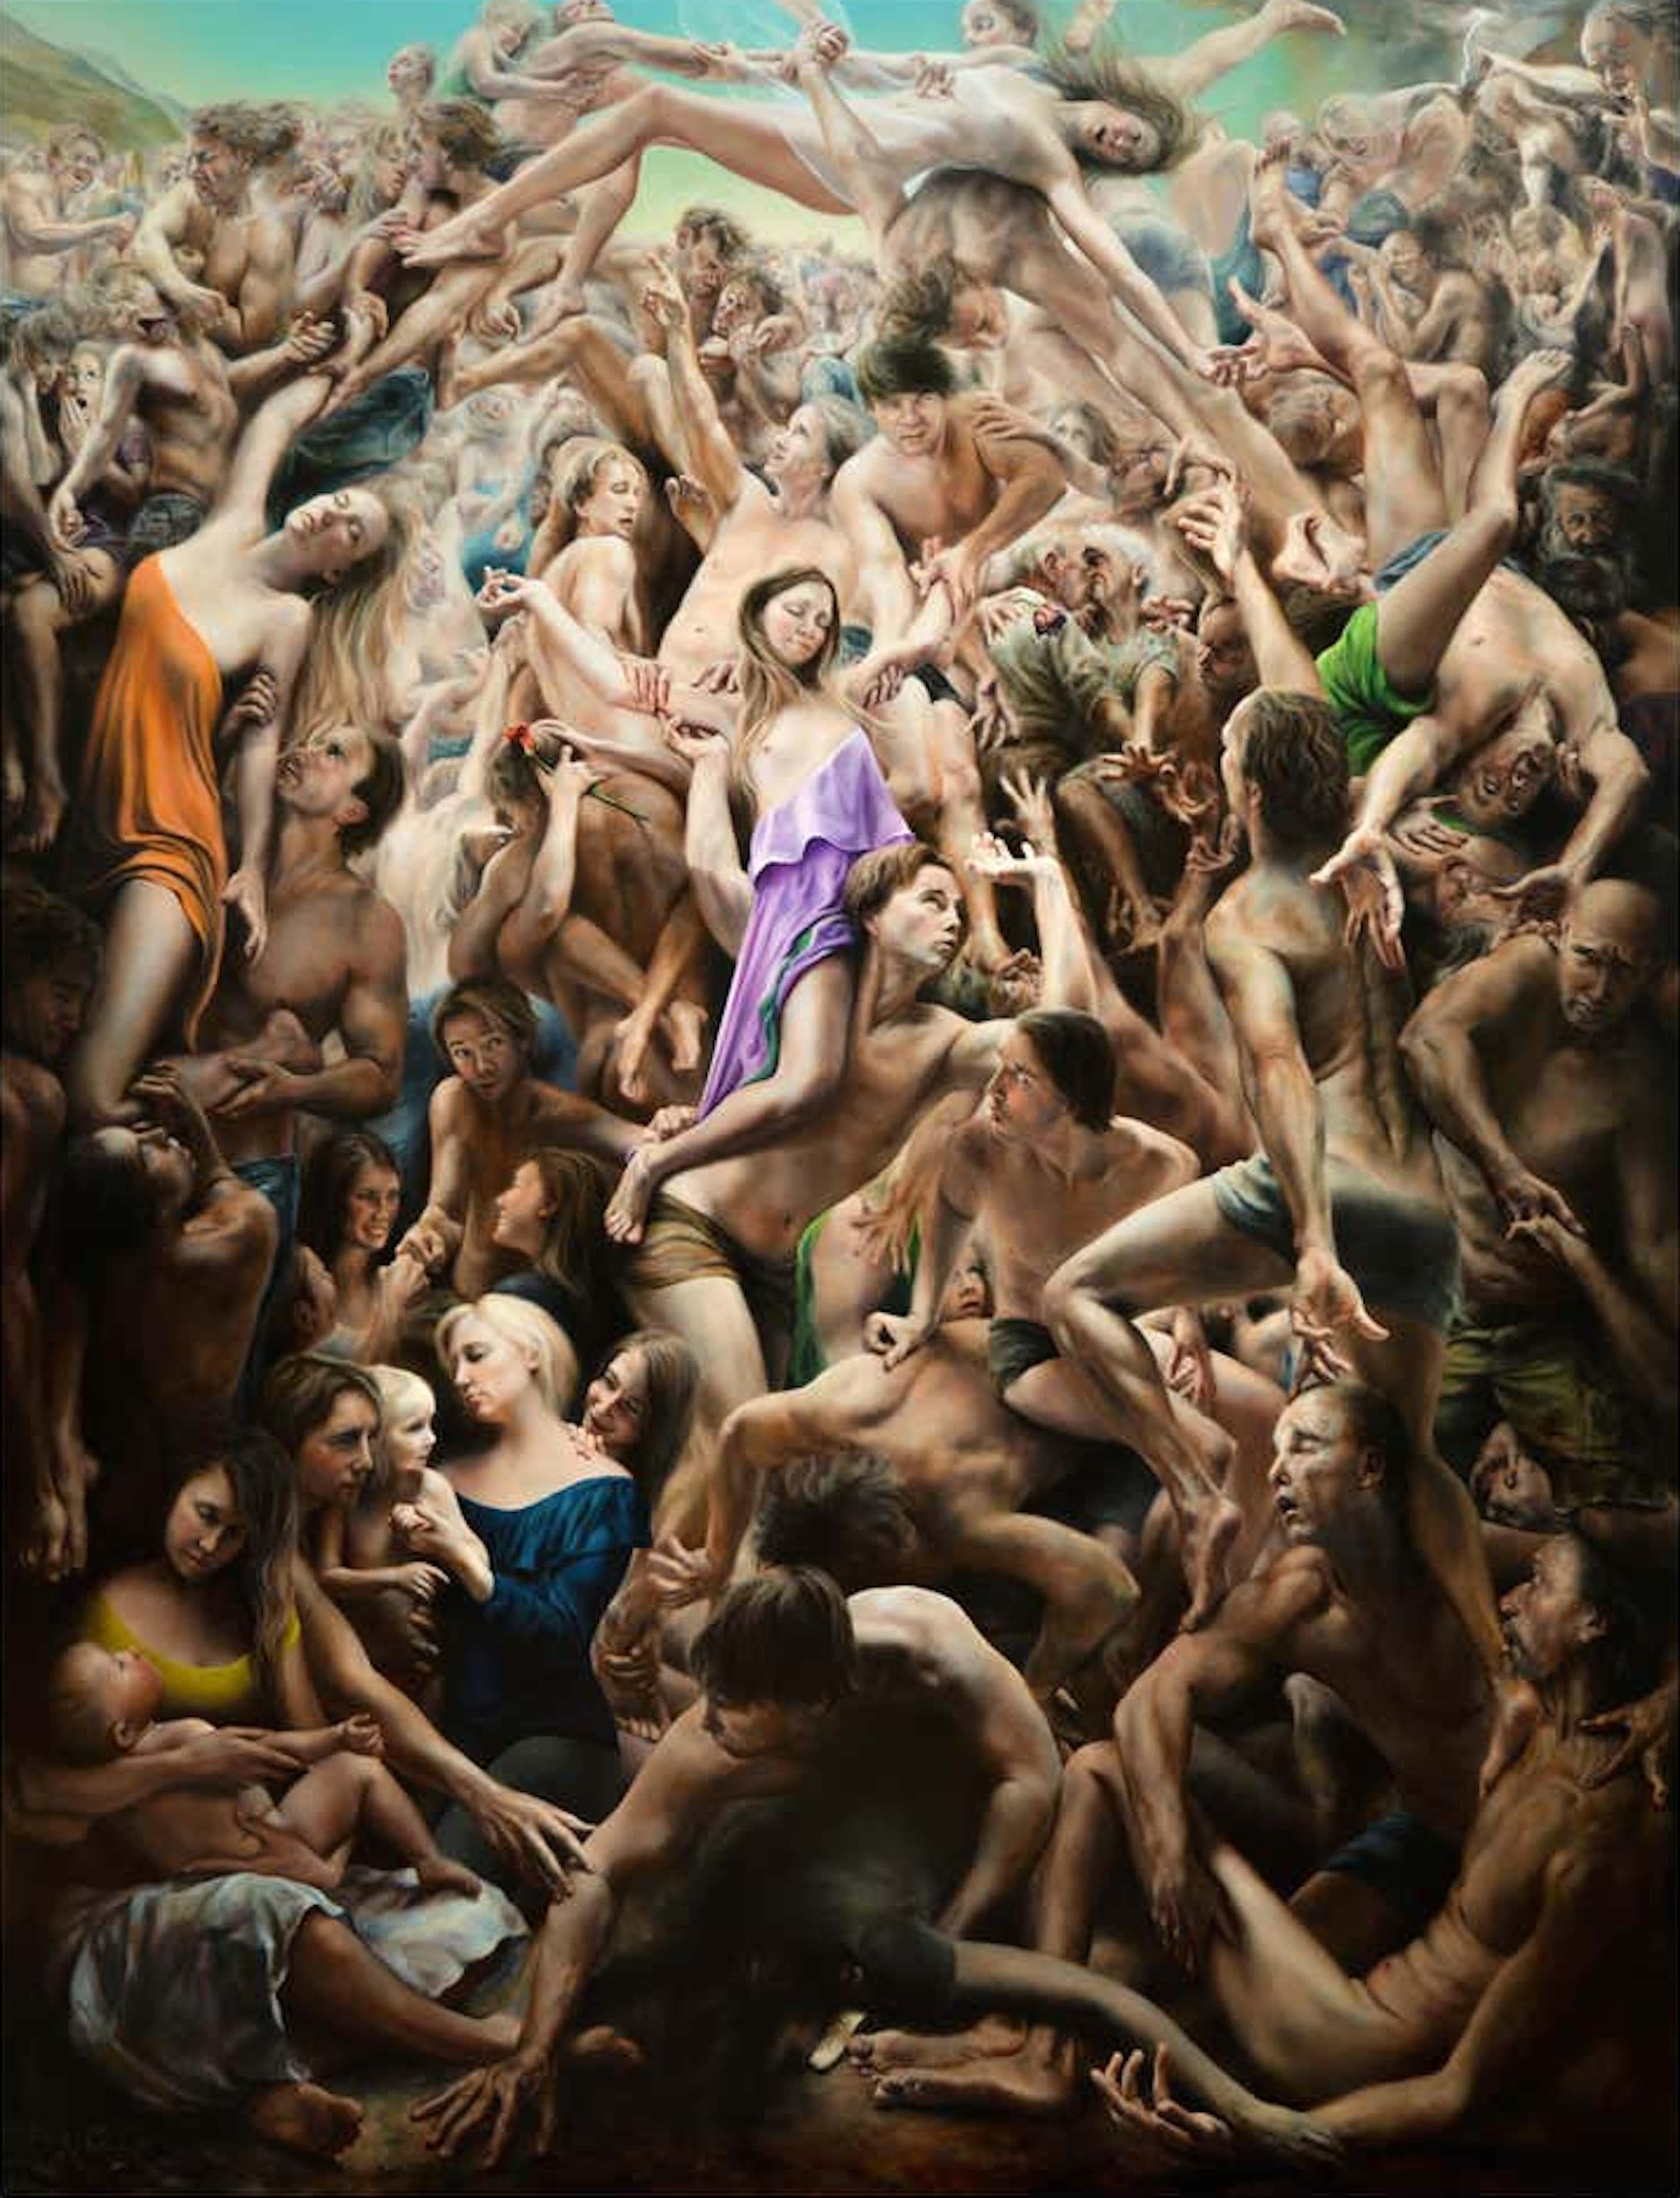 James Van Fossan Nude Painting - Drama Magnifico